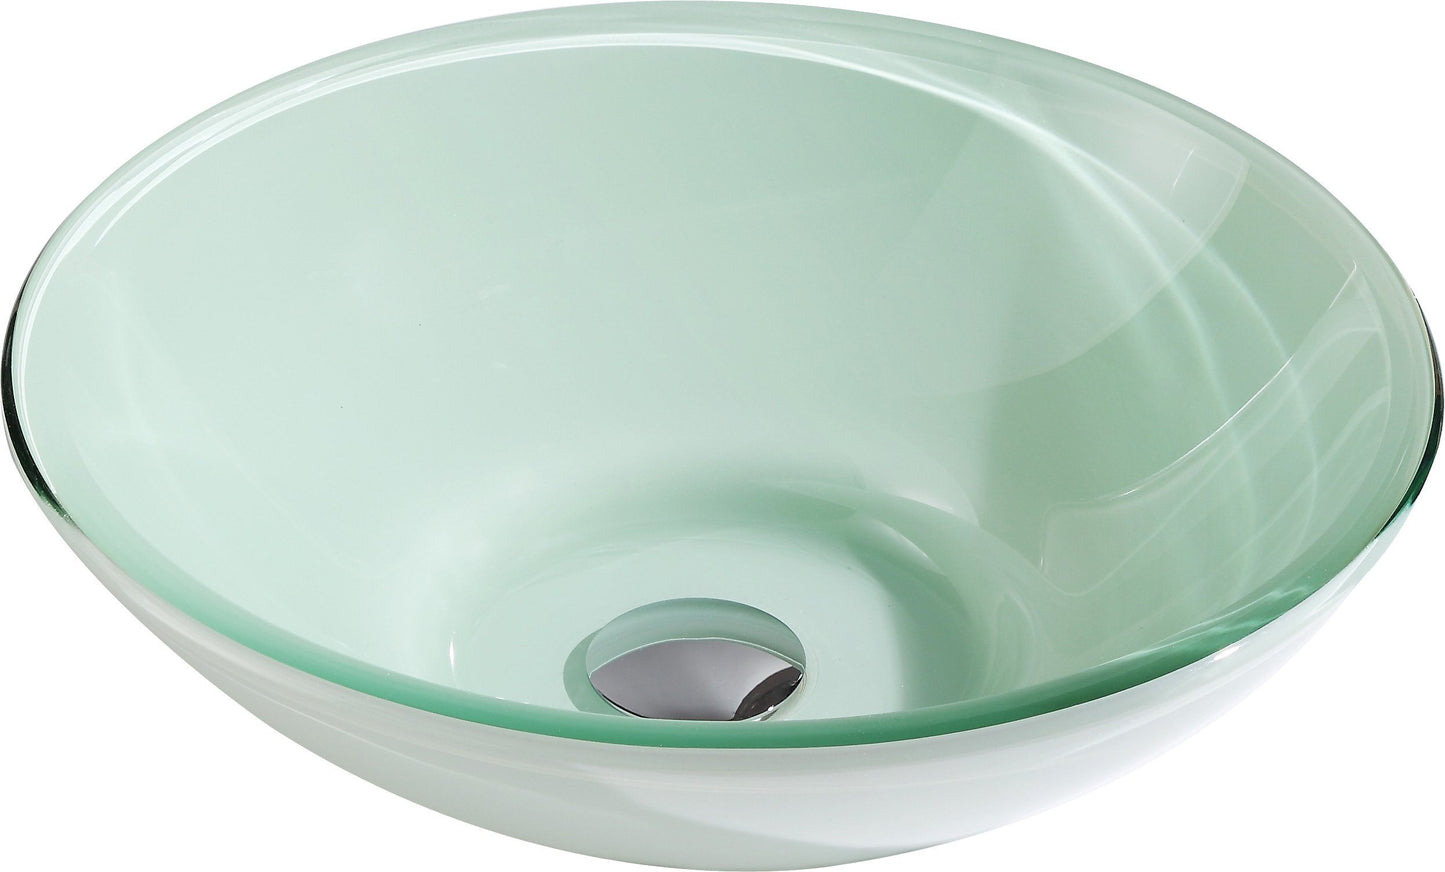 Sonata Series Deco-Glass Vessel Sink in Lustrous Light Green with Fann Faucet in Brushed Nickel - Luxe Bathroom Vanities